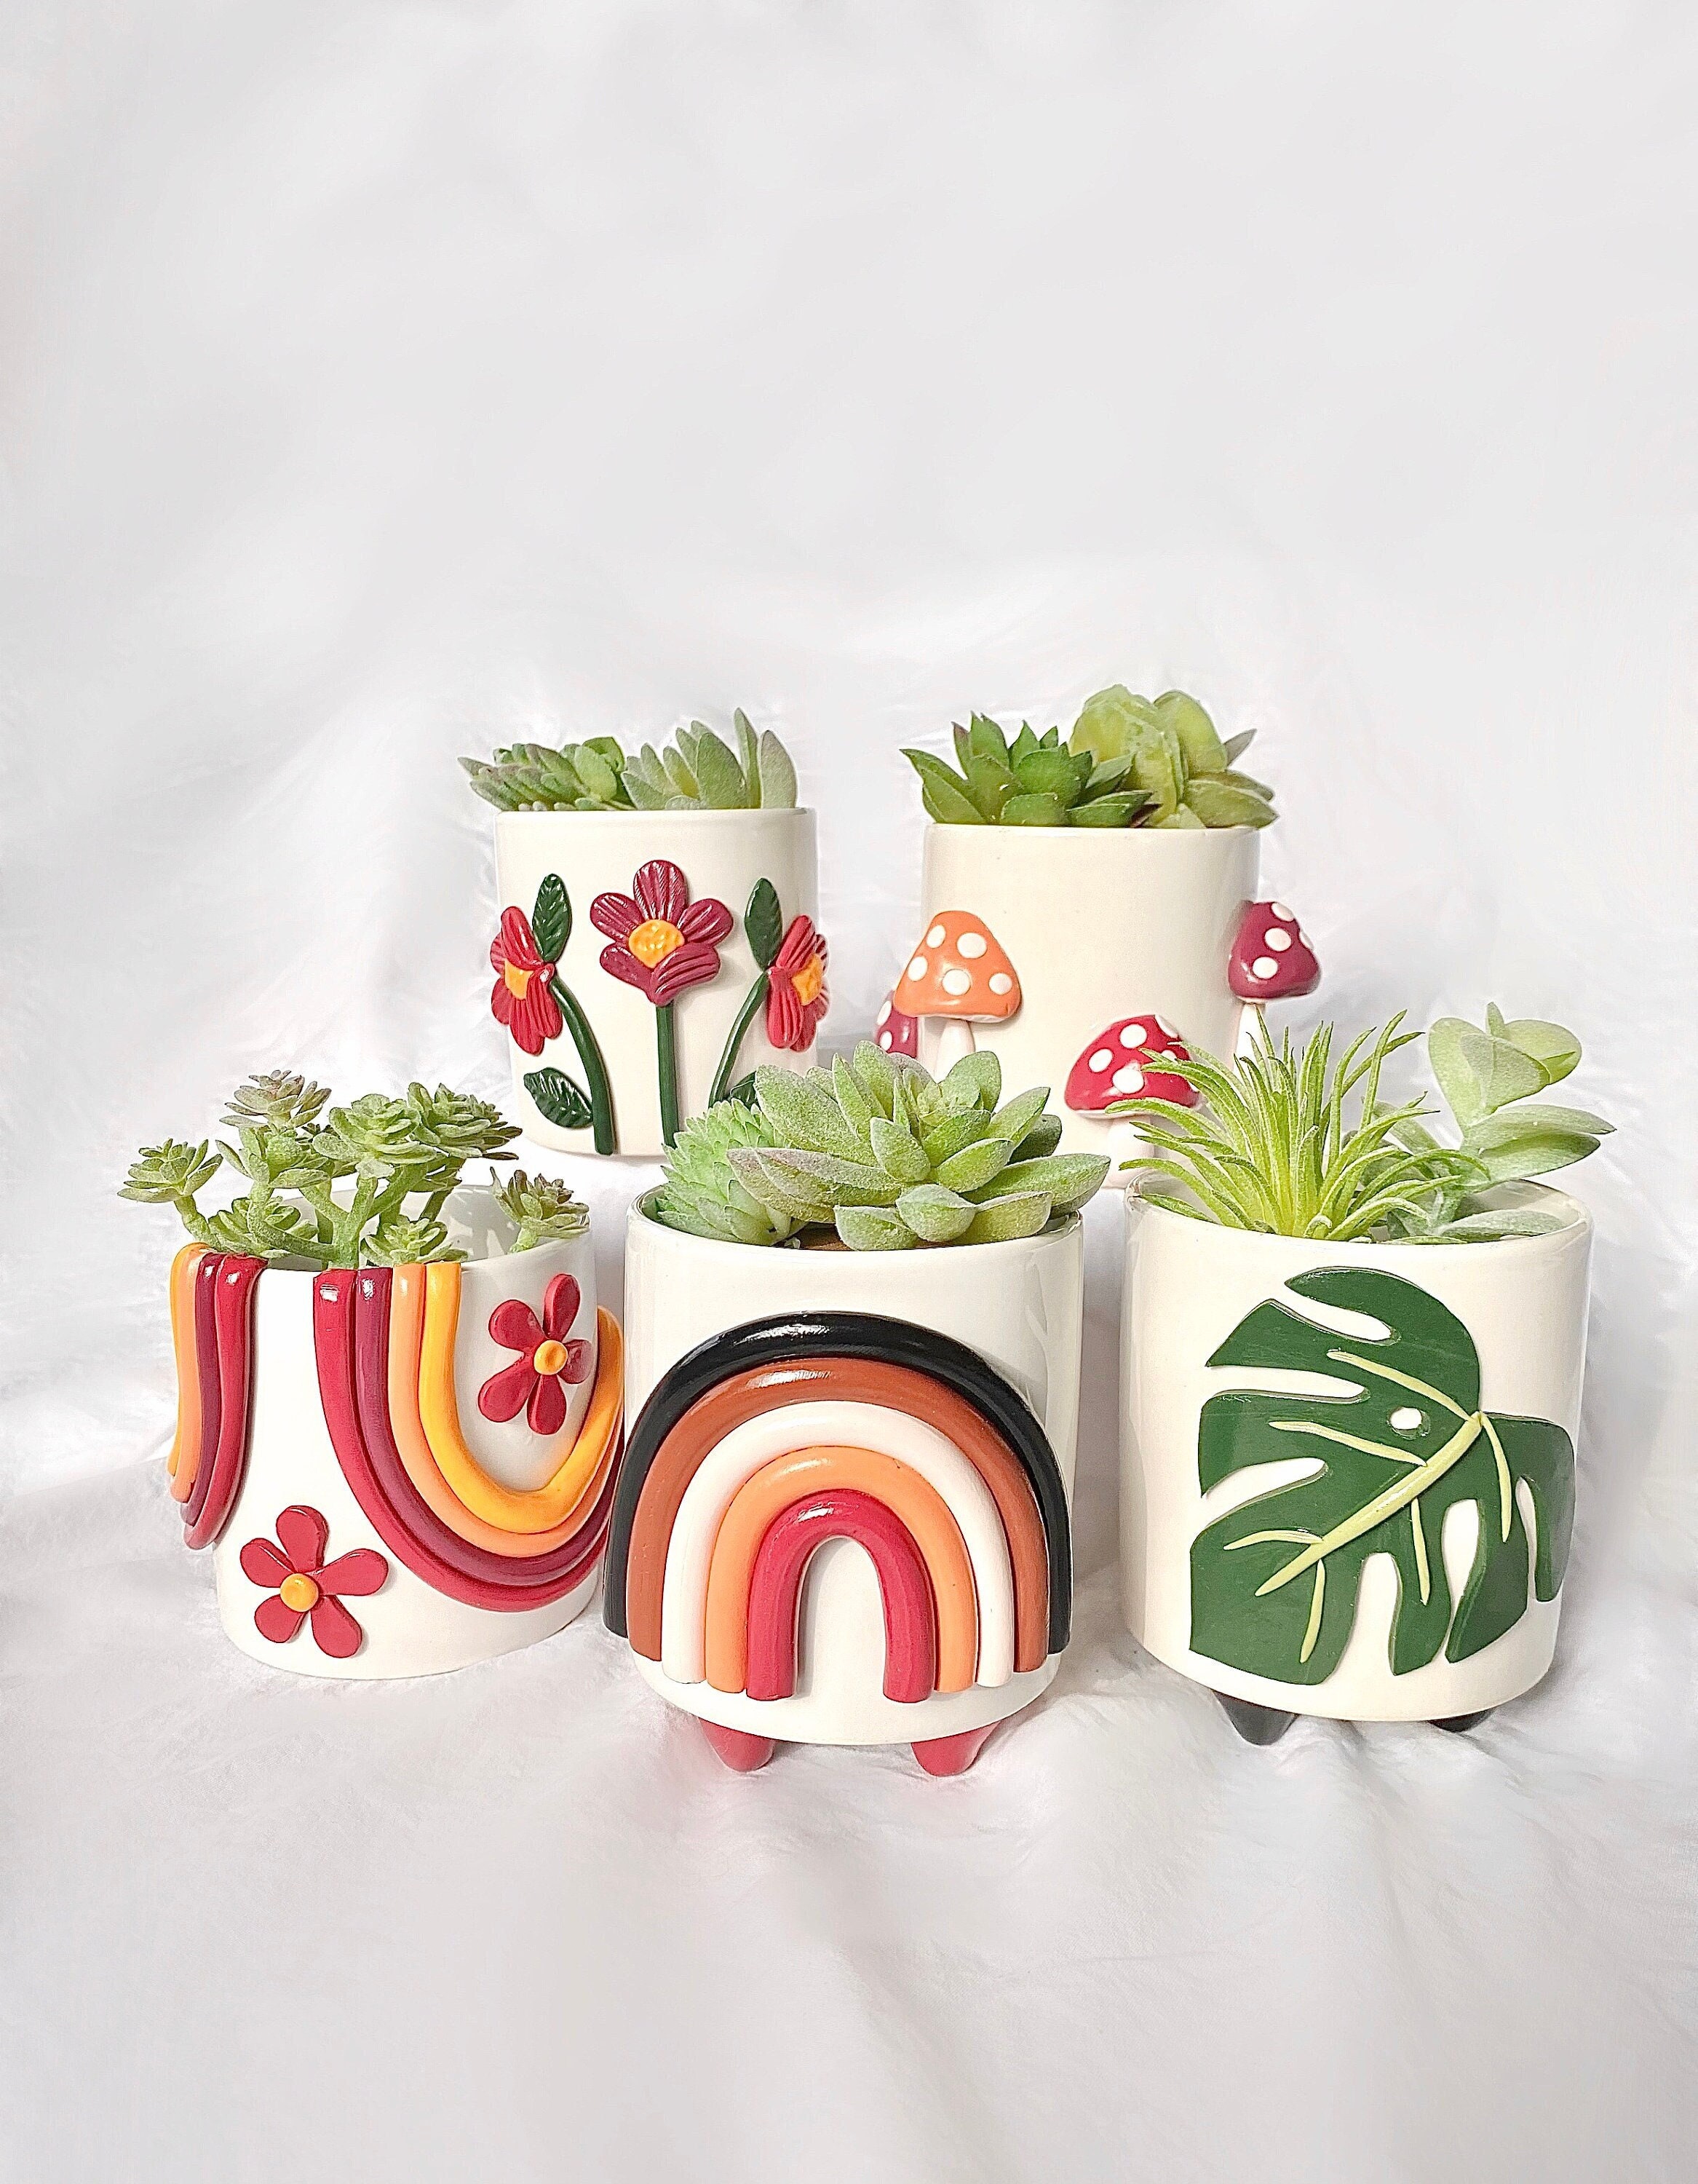 Rainbow Raindrops Planter Pot/ Cloud and Rainbow Pot/ Succulent Planter/ Cactus Planter/ Small Ceramic Planter Pot/ Boho Eclectic Home